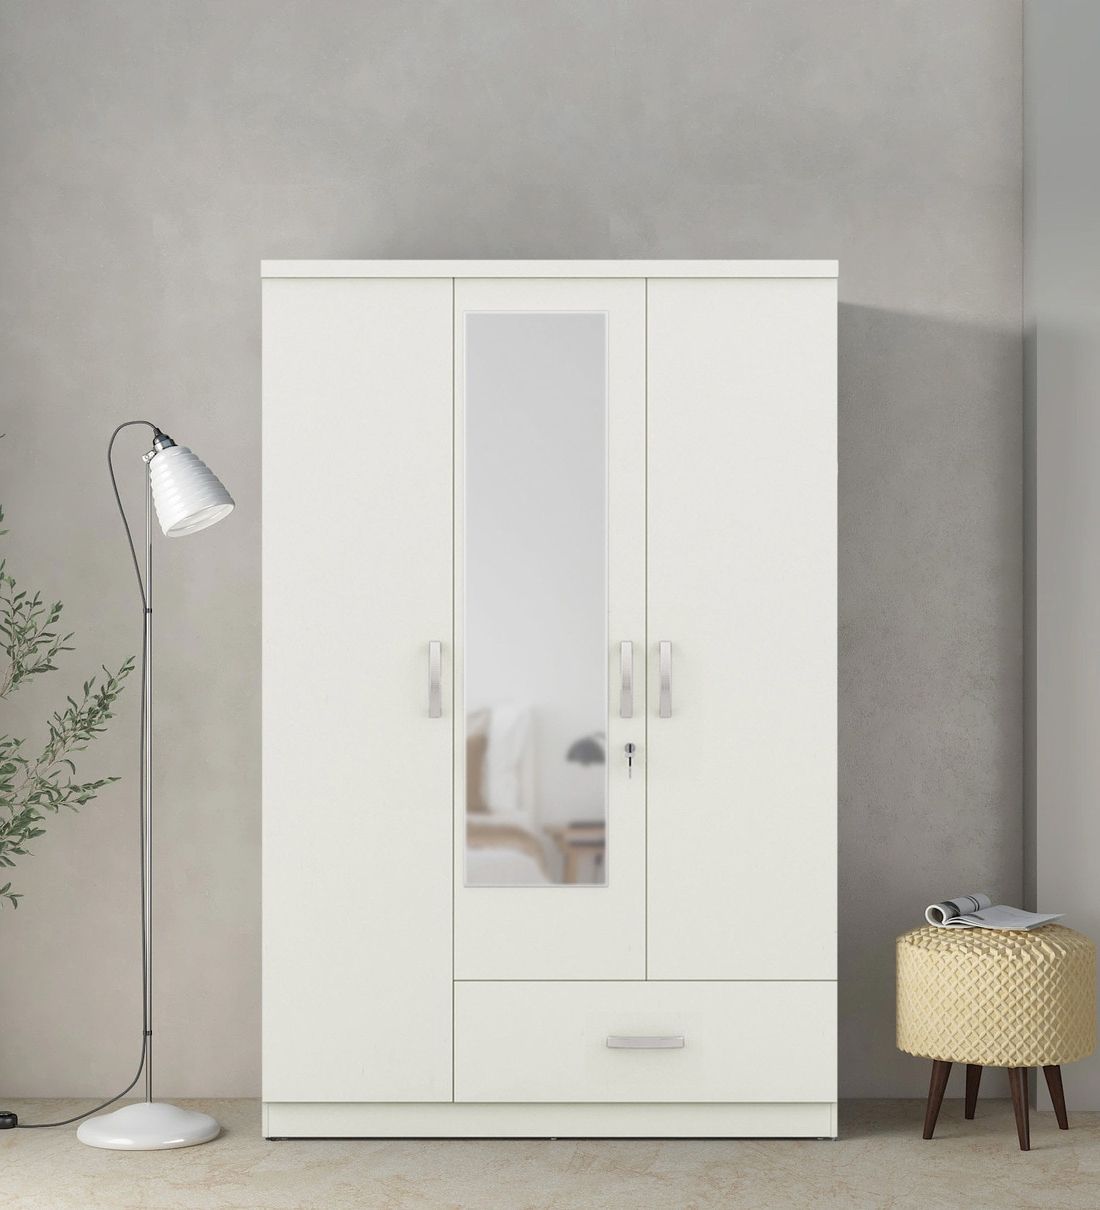 Buy Utsav 3 Door Wardrobe In White Finish With Mirror At 53% Off Hometown | Pepperfry Within White 3 Door Mirrored Wardrobes (Gallery 15 of 20)